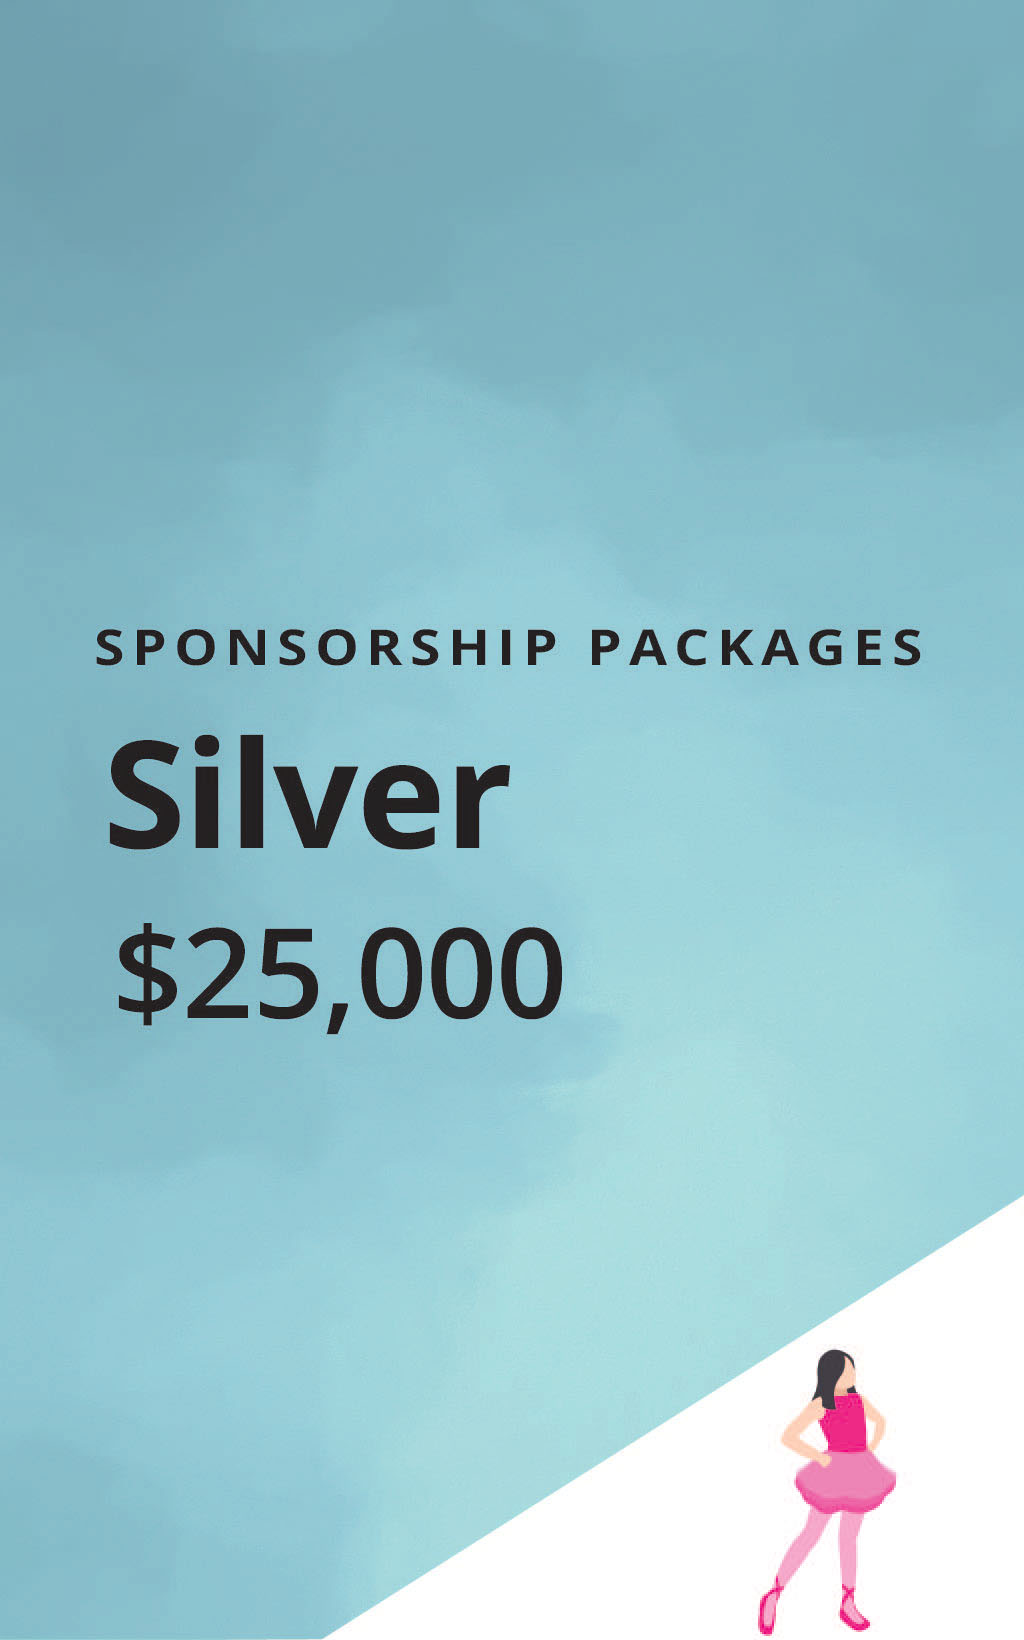 Silver level $25,000